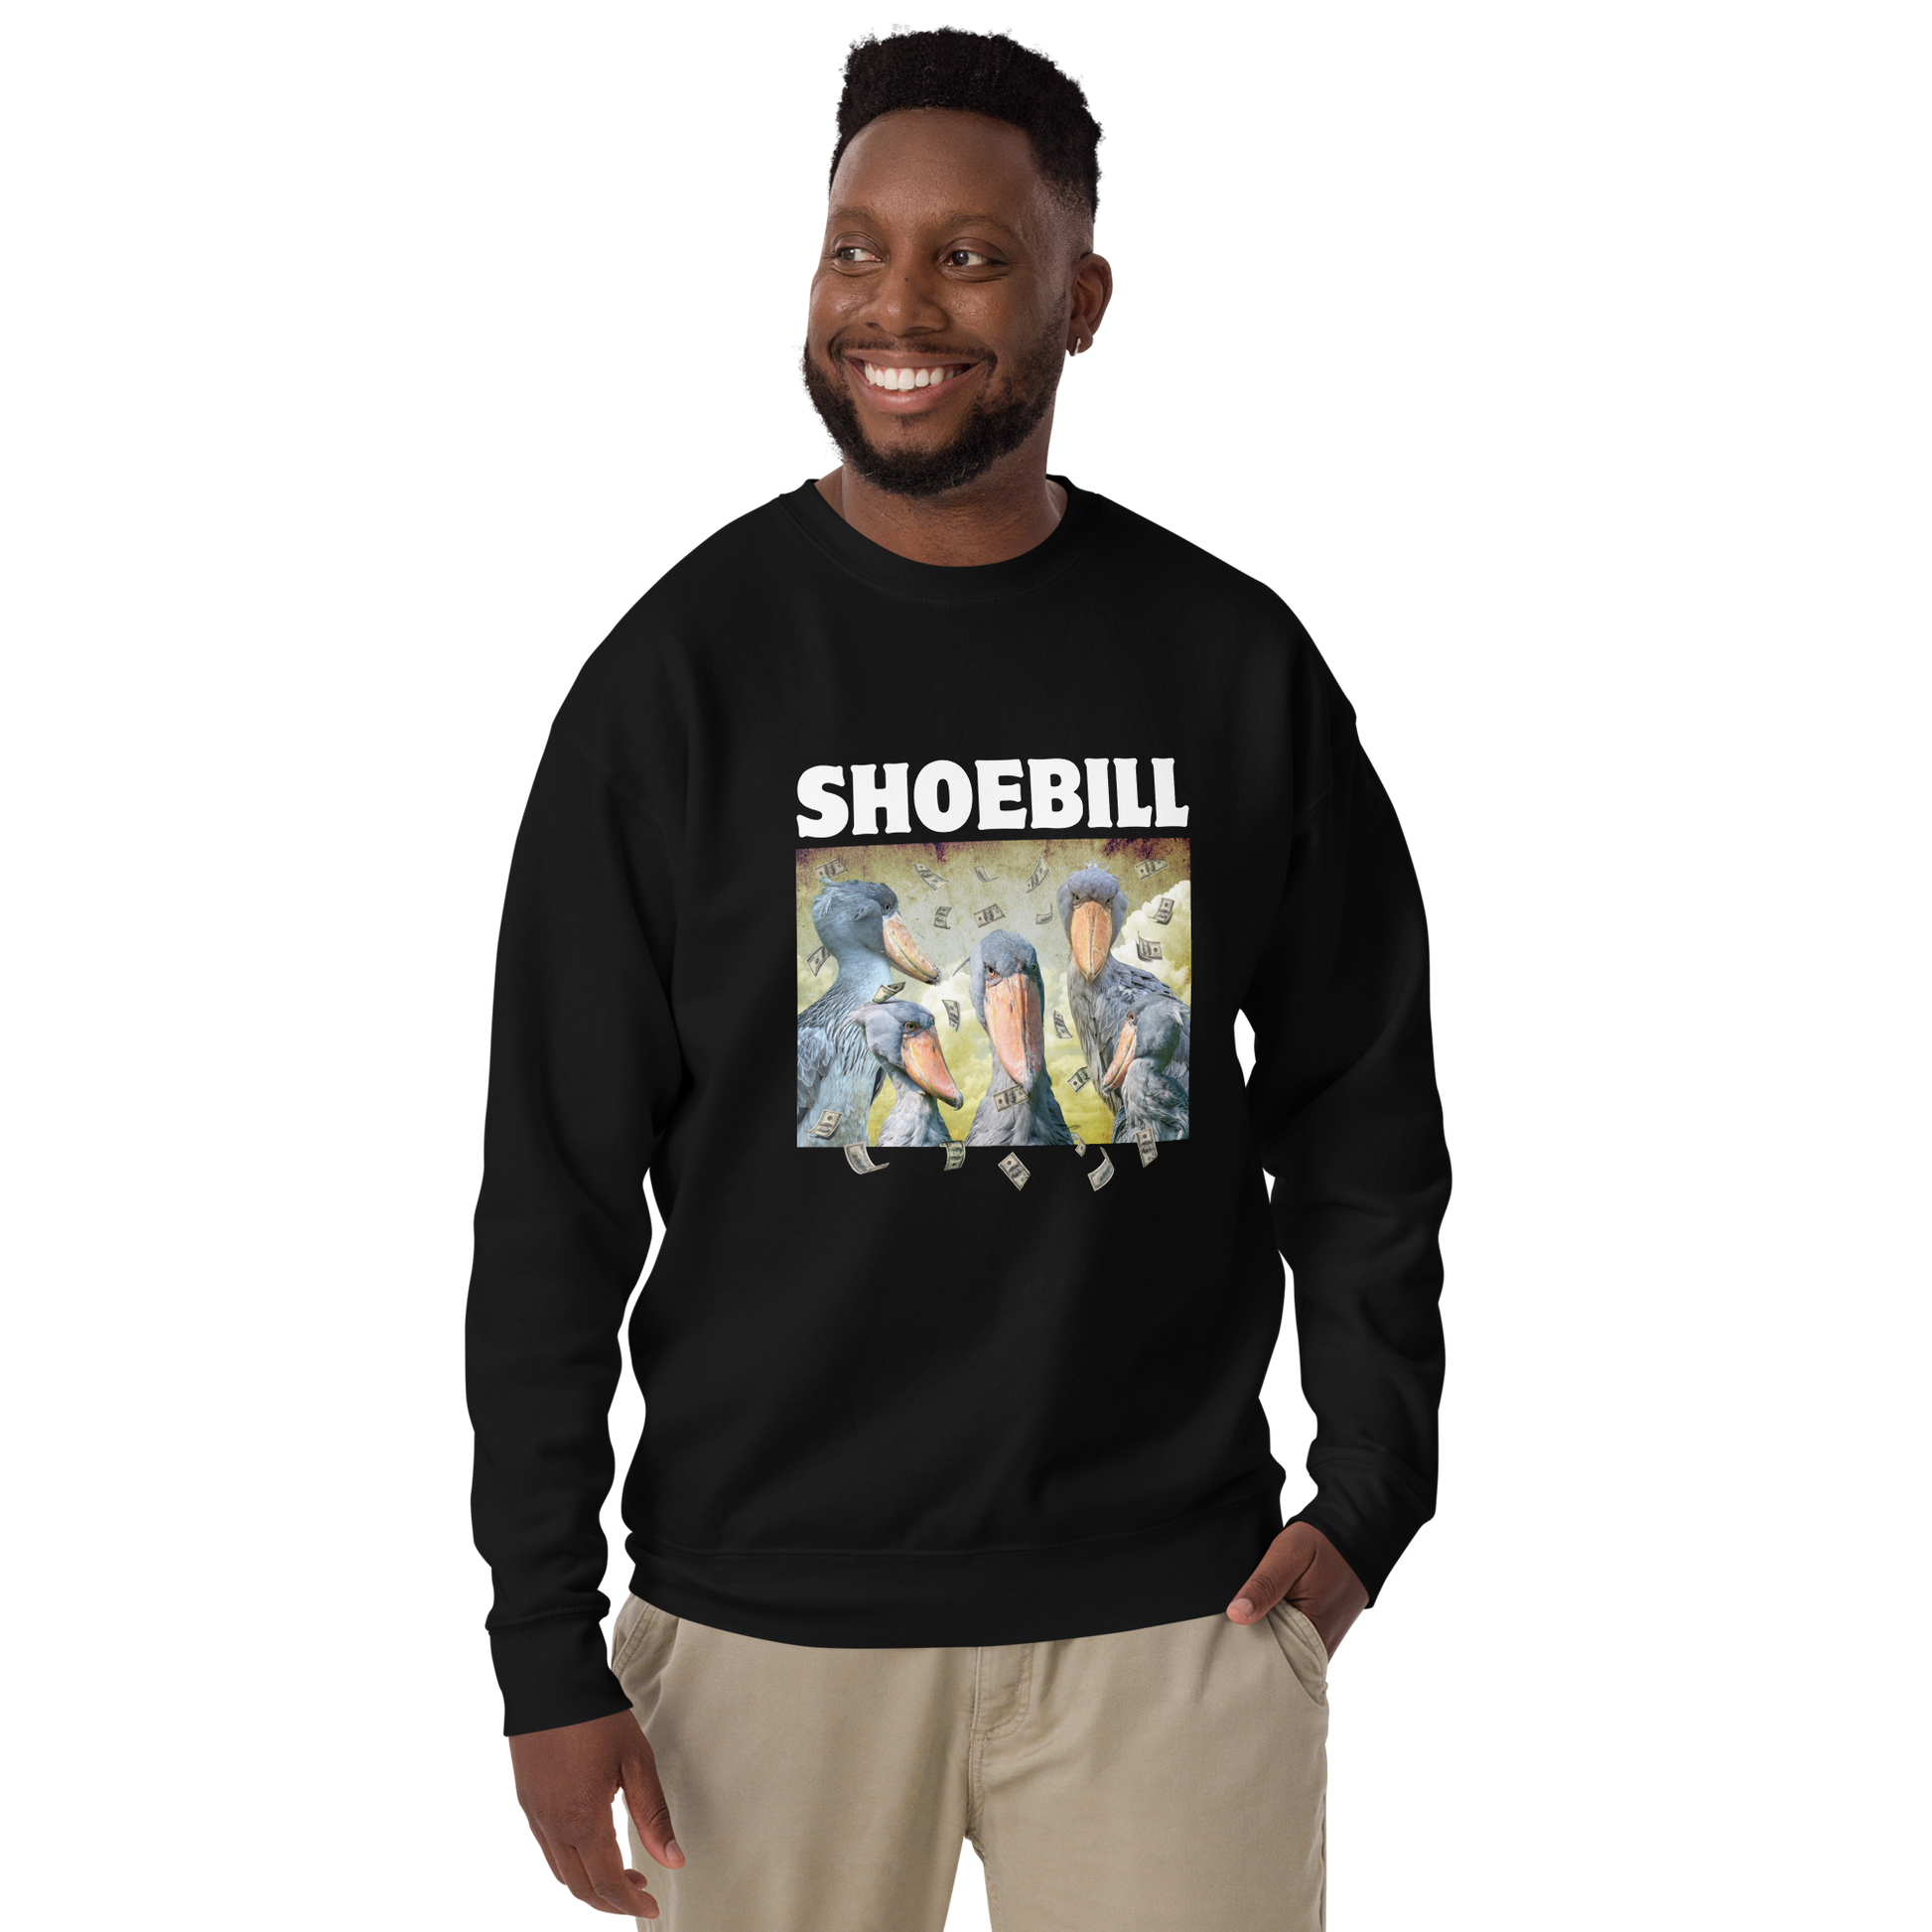 Man wearing a Black Premium Shoebill Sweatshirt featuring a cool Shoebill graphic on the chest - Artsy/Funny Graphic Shoebill Stork Sweatshirts - Boozy Fox